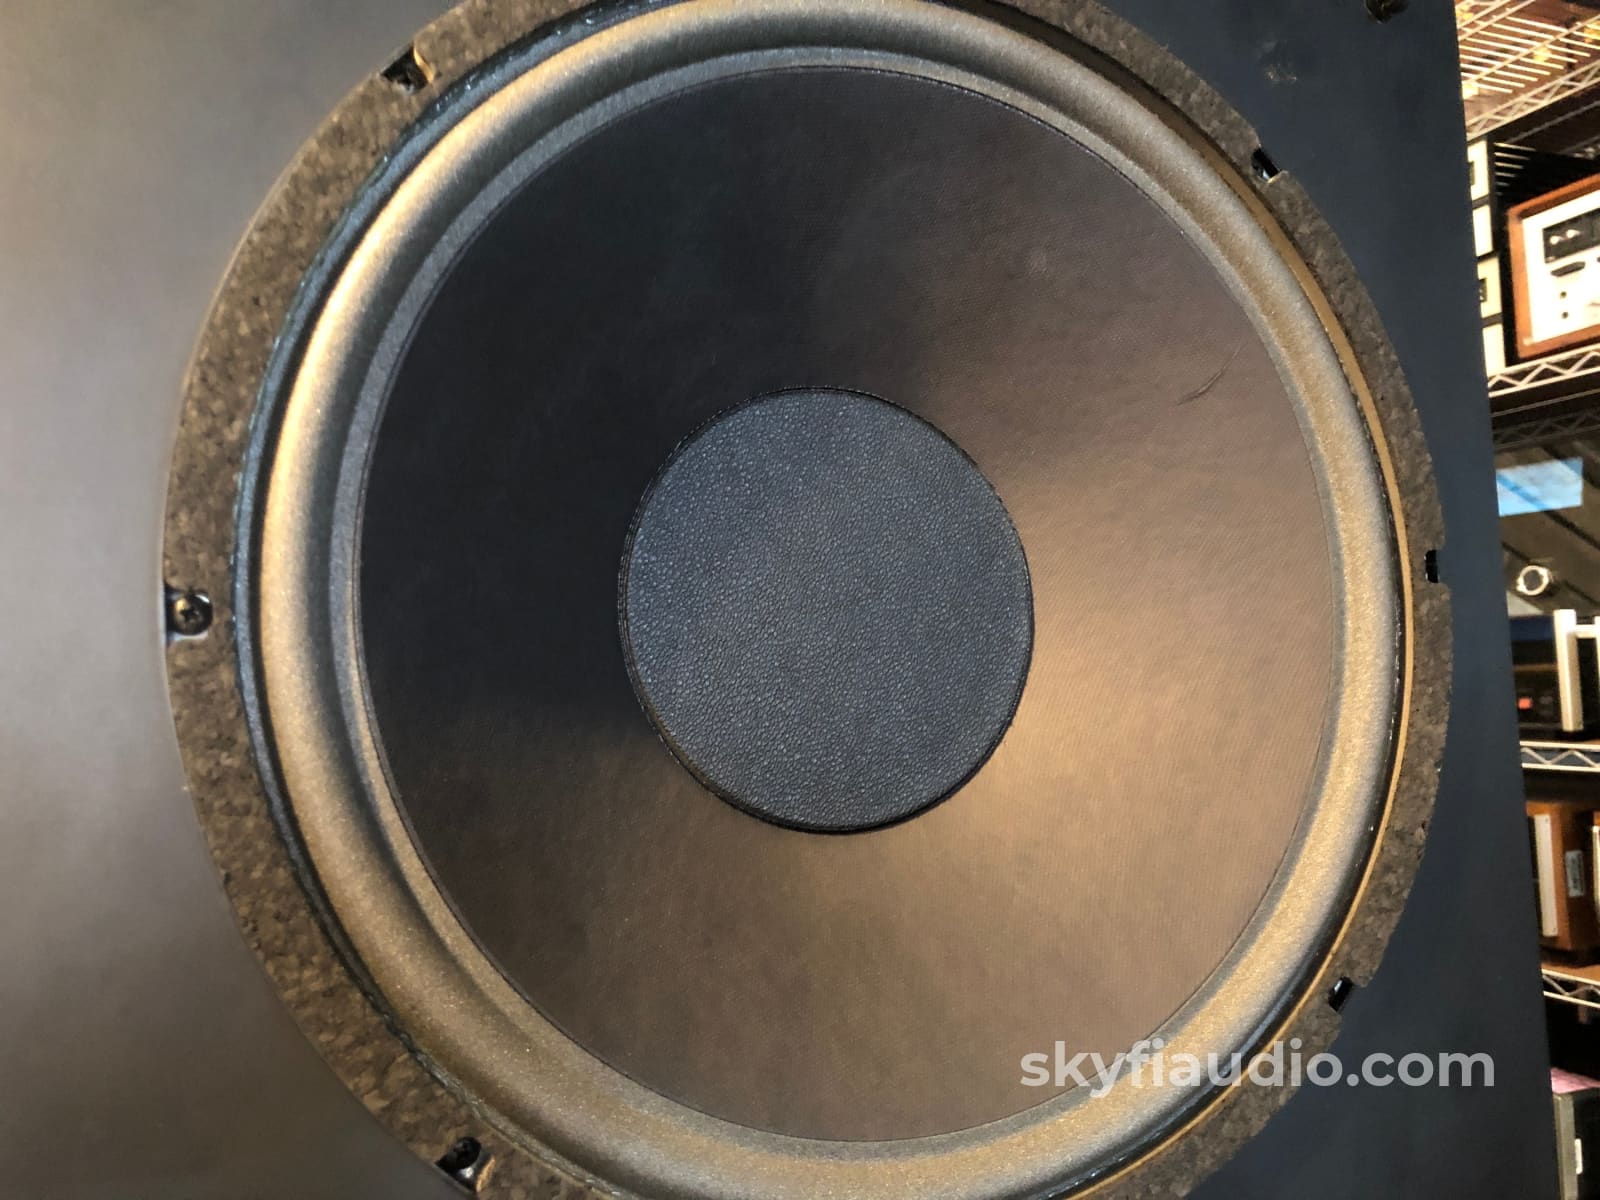 Dunlavy Audio Sc Vi Speakers - Monstrous Sound At 91Db Efficiency!